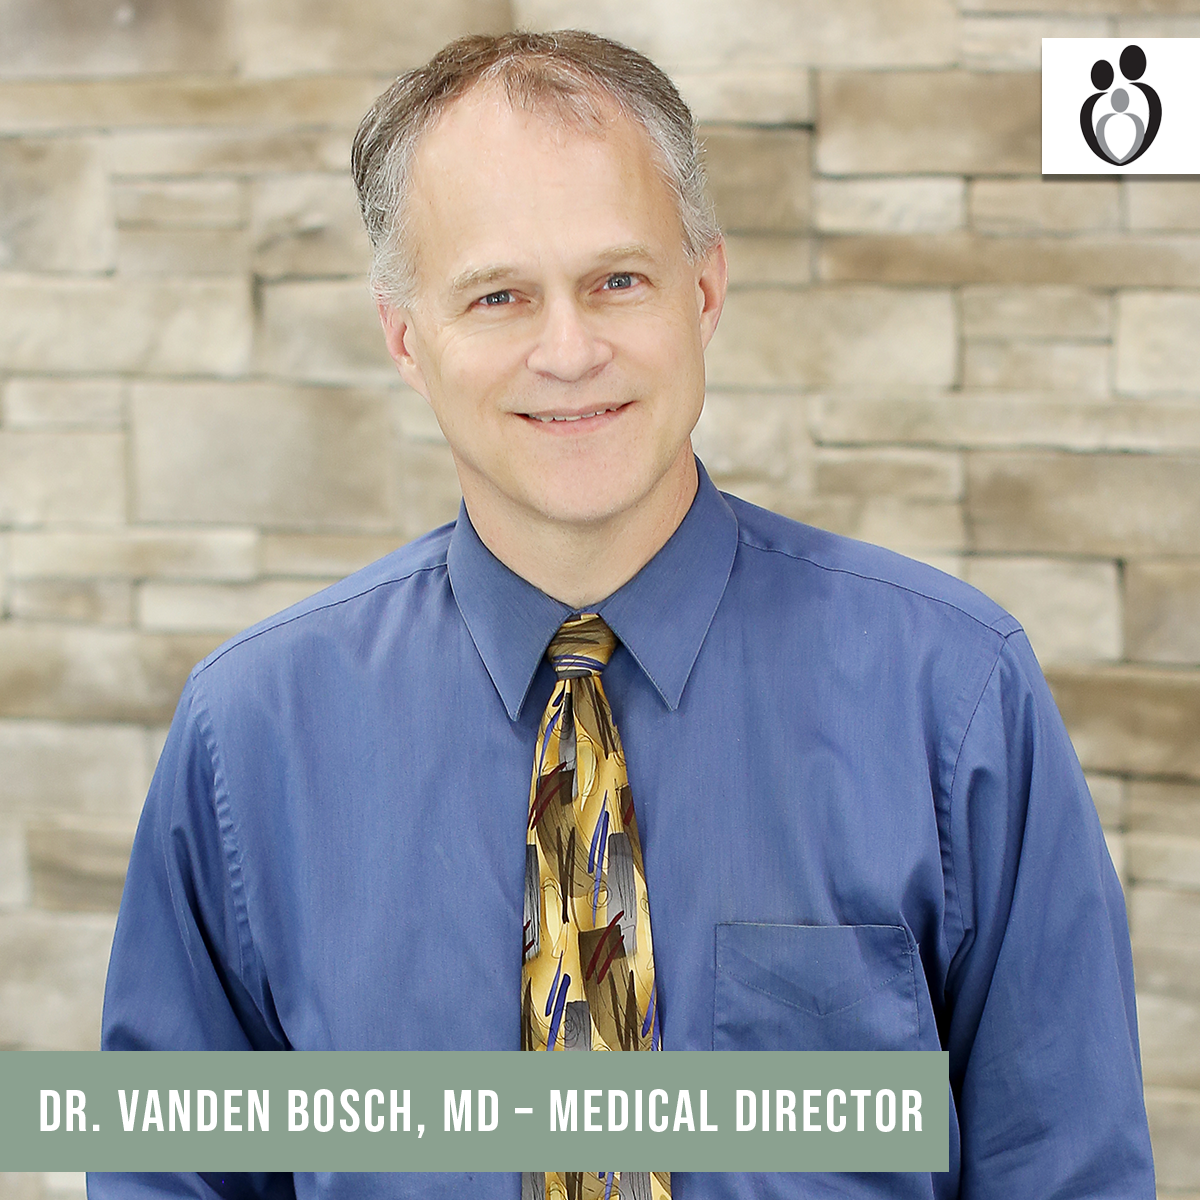 Dr. Vanden Bosch, MD - Medical Director at Promise Community Health Center in northwest Iowa